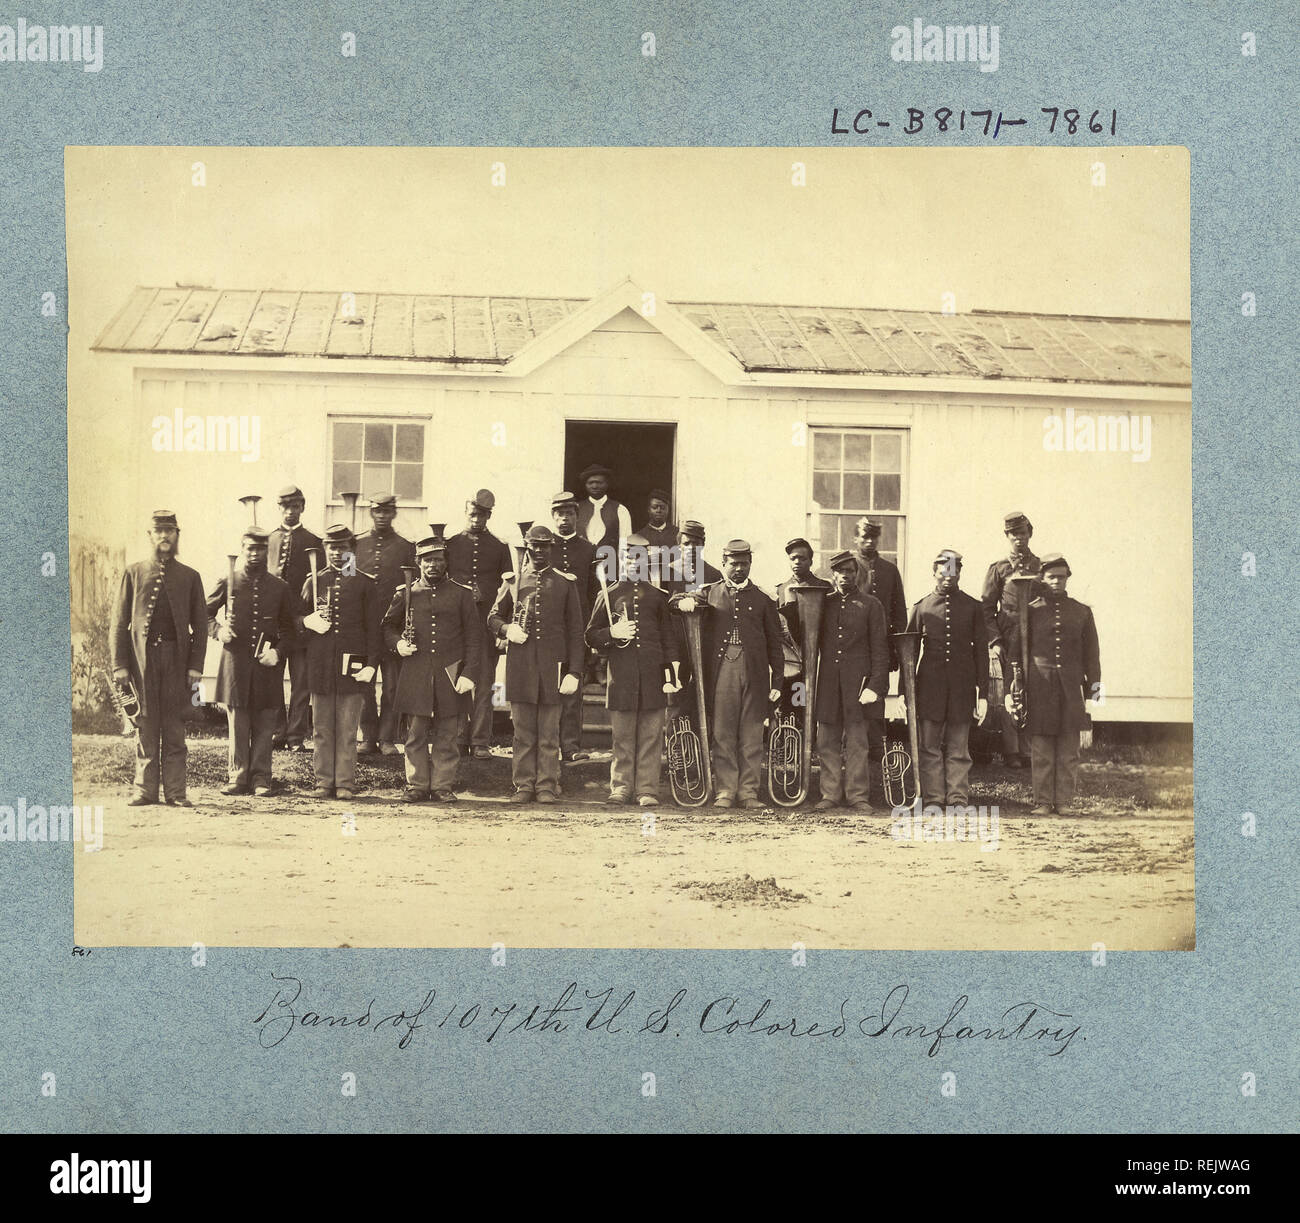 Band of 107th U.S. Colored Infantry, Union Army, Arlington, Virginia, USA, William M. Smith, November 1865 Stock Photo